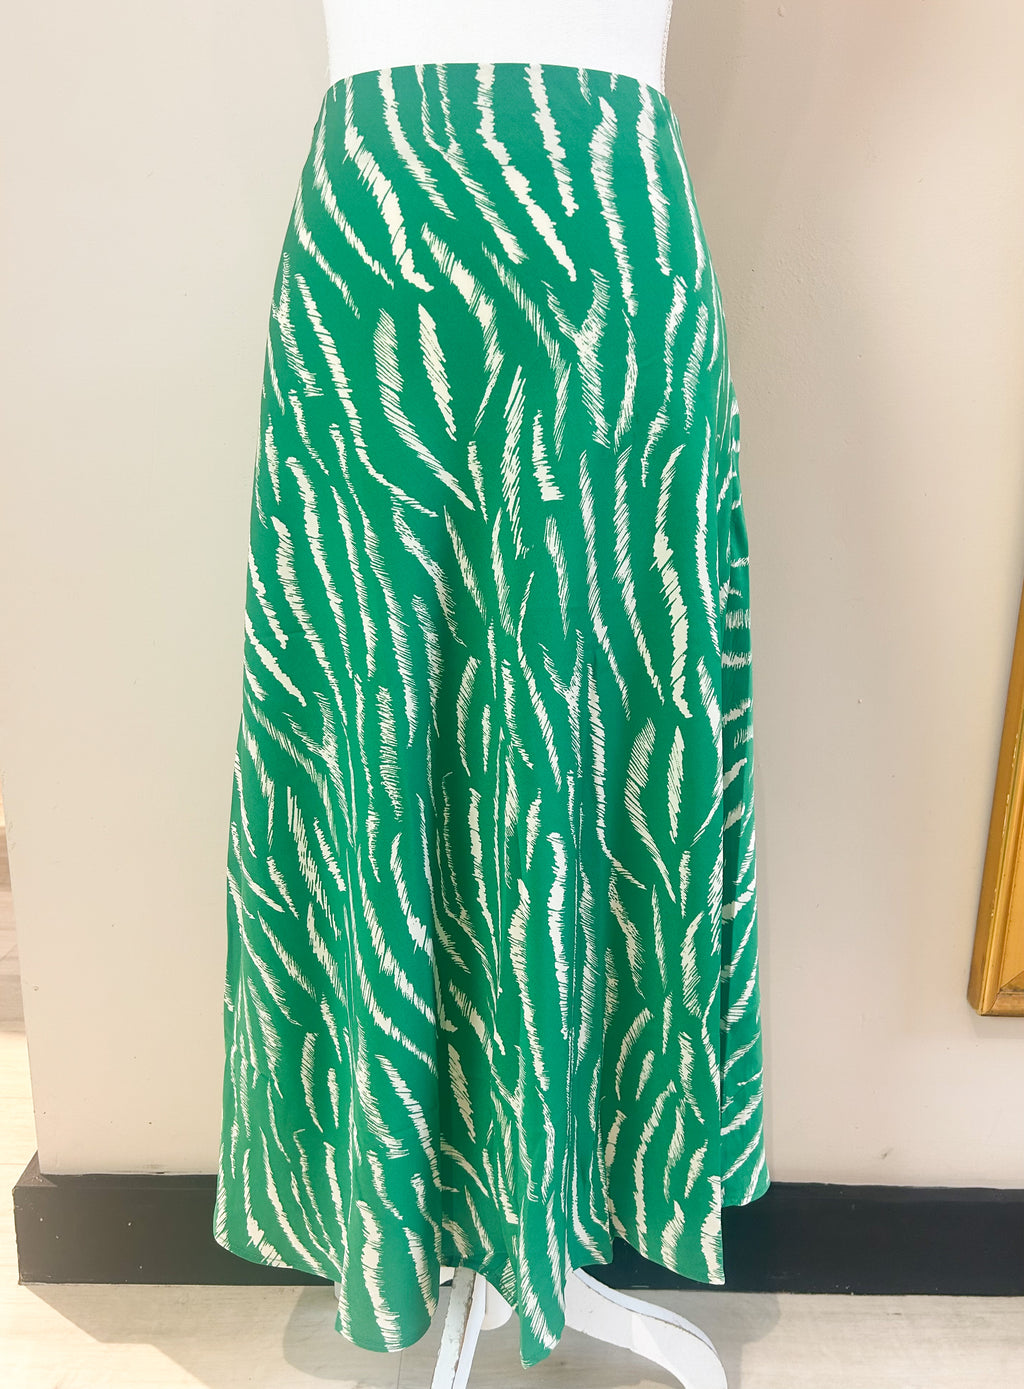 Bright green printed Skirt 💚